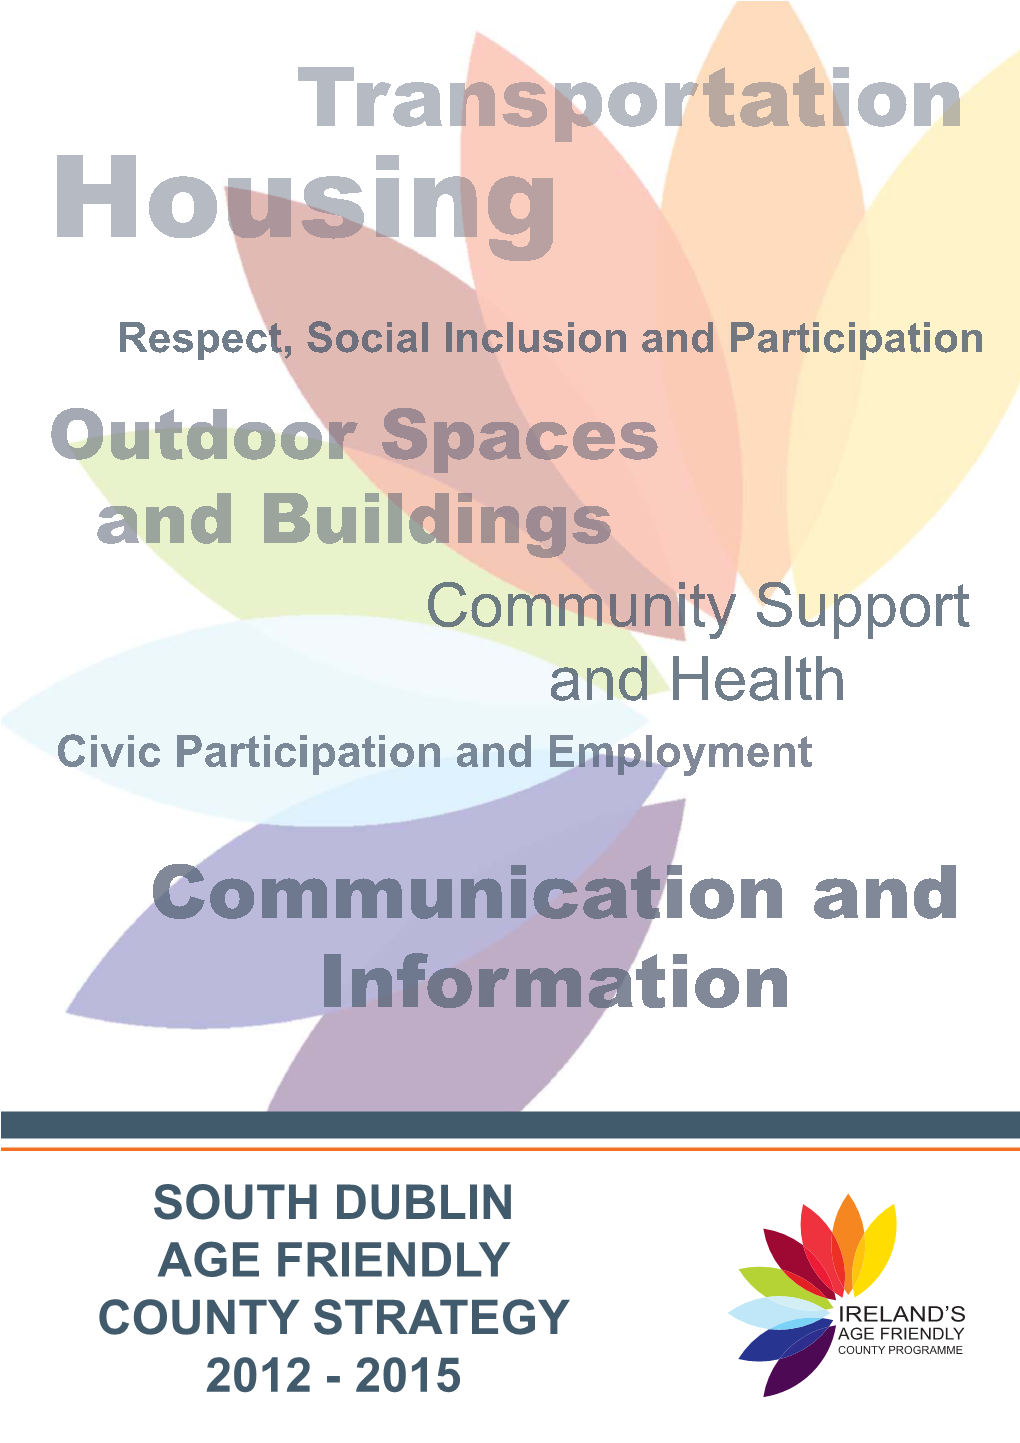 South Dublin Age Friendly County Strategy 2012